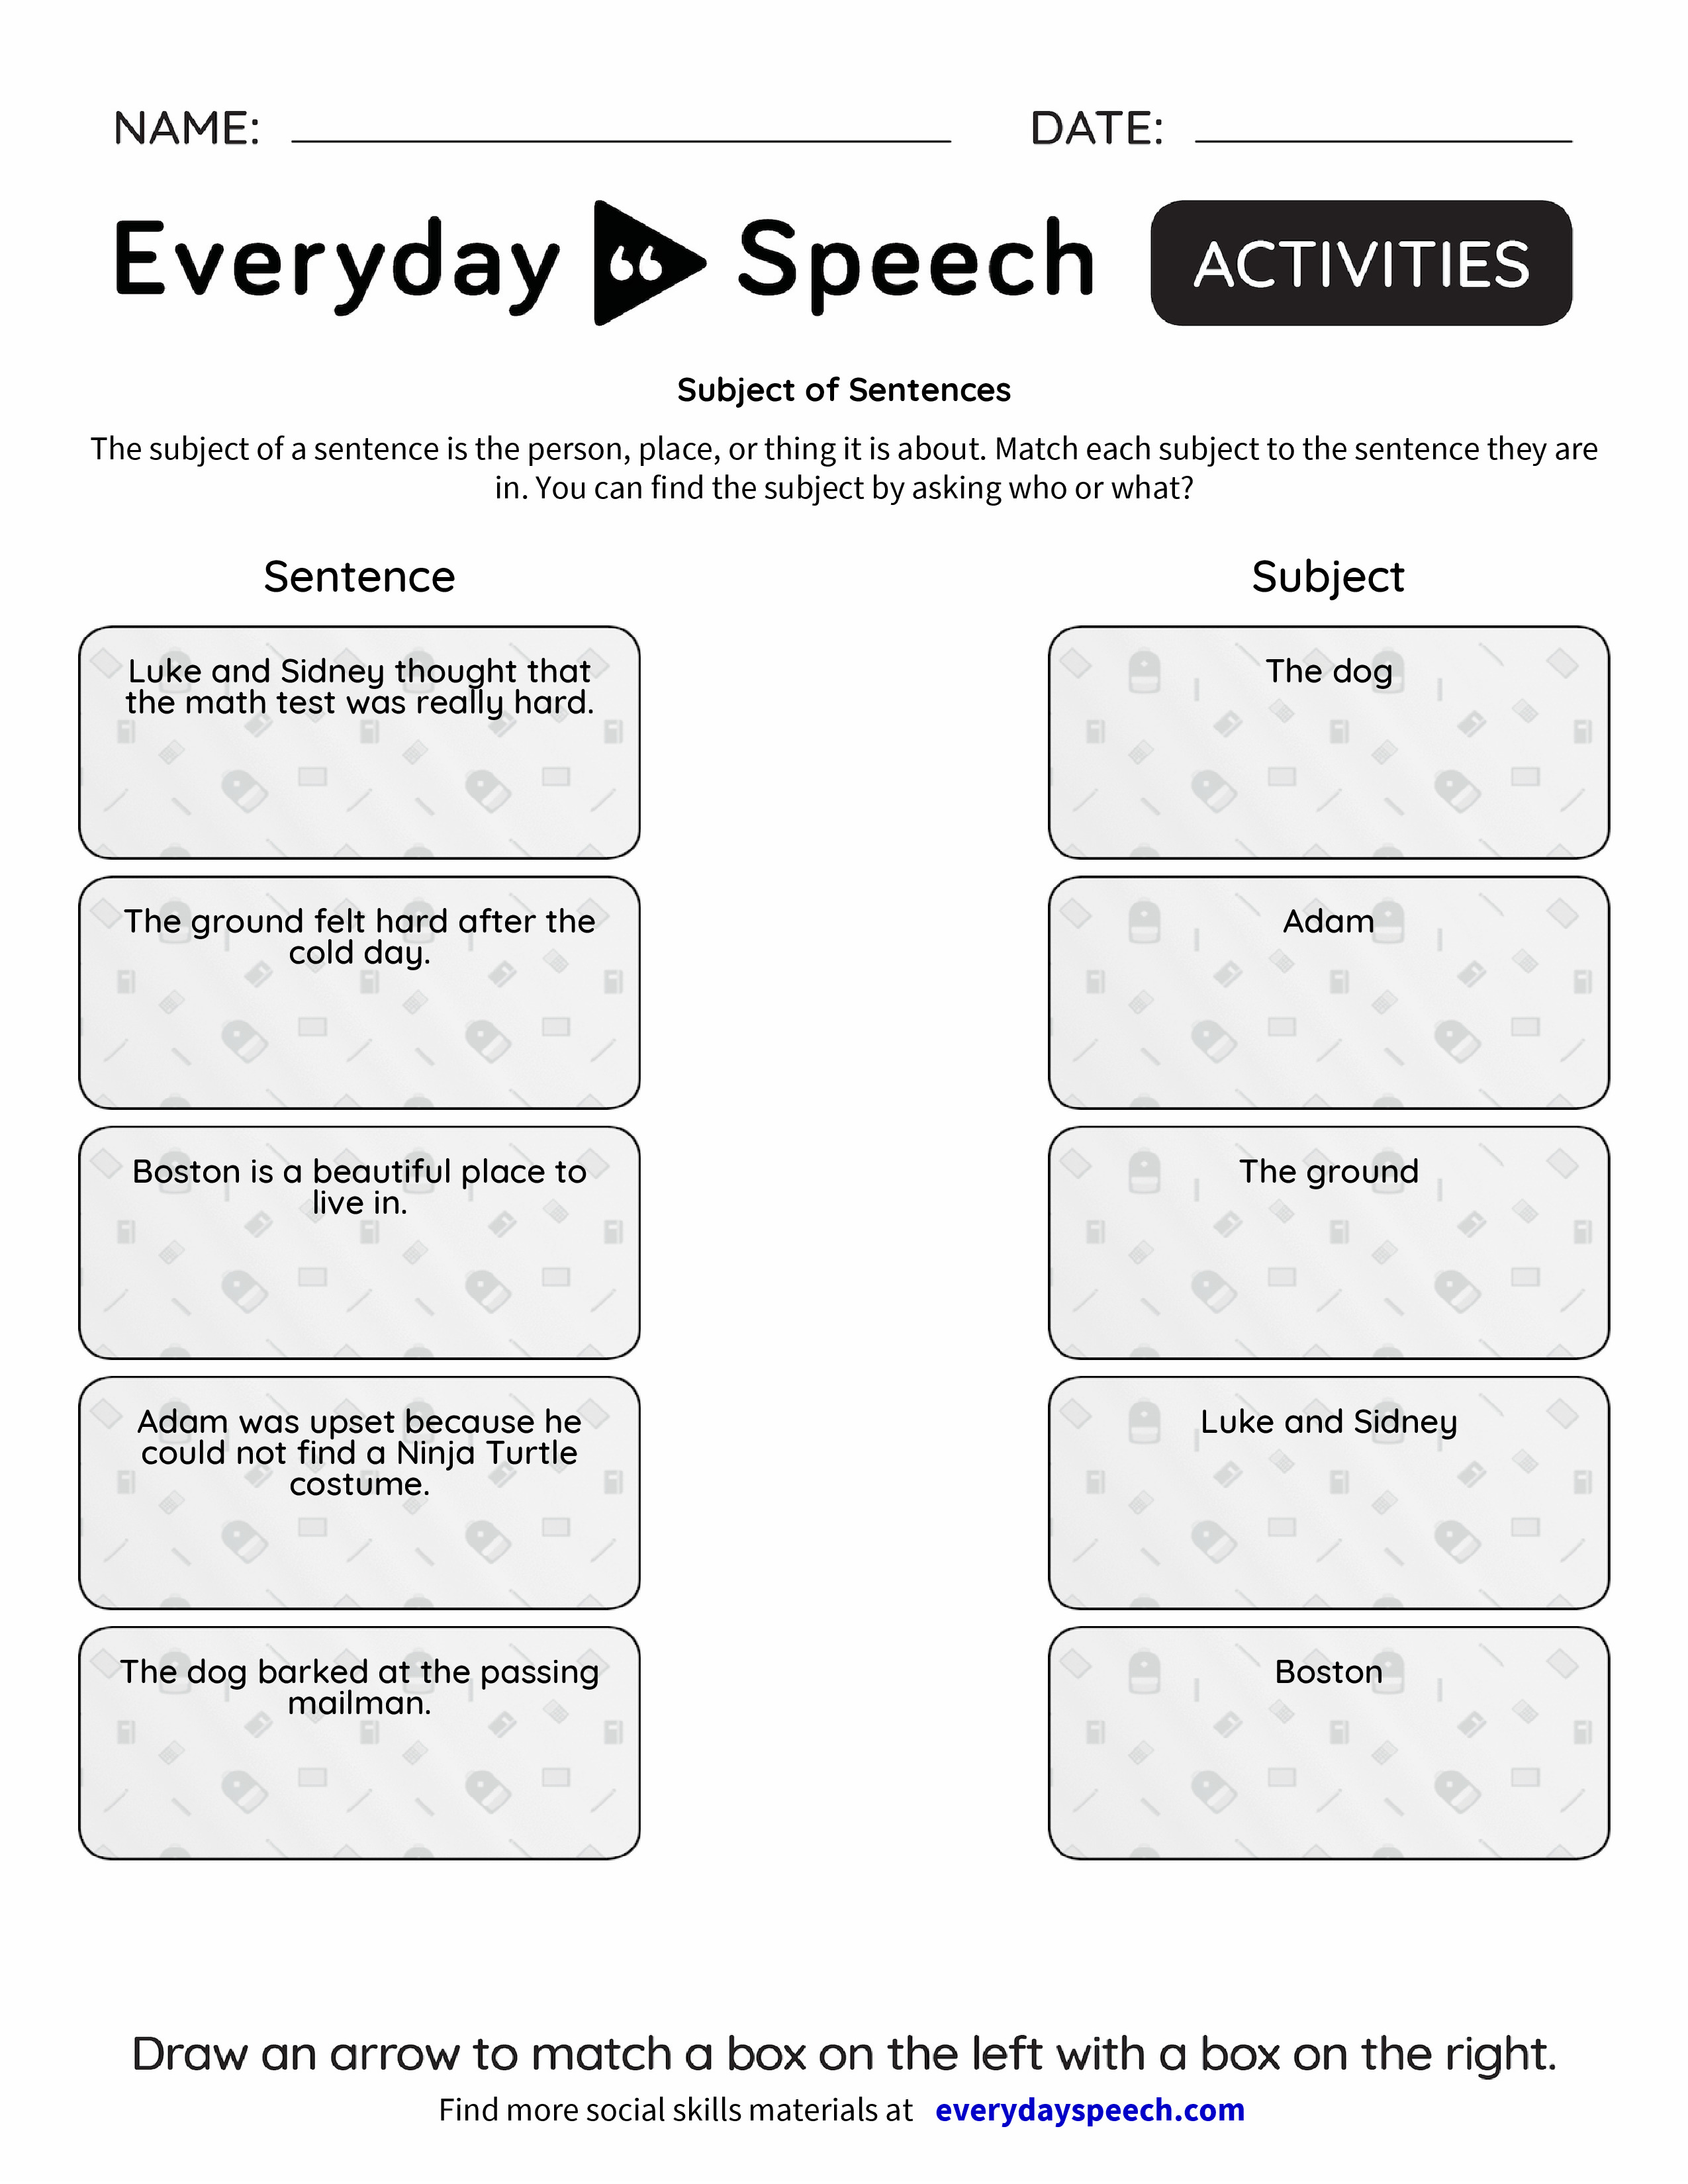 subject-of-sentences-everyday-speech-everyday-speech